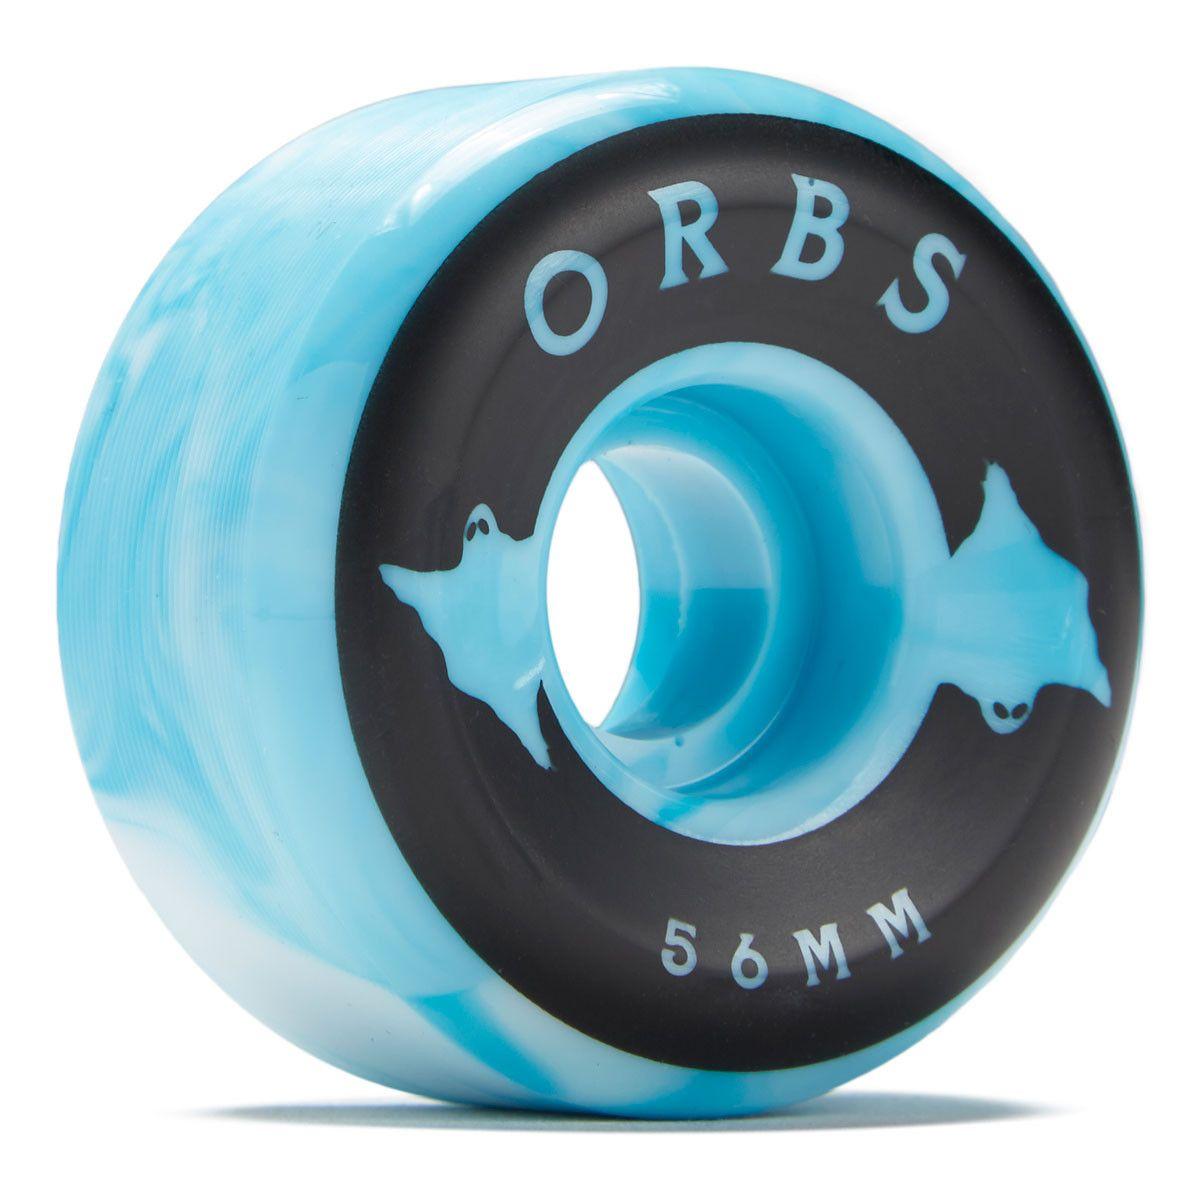 Blue and White Swirl Logo - Welcome Orbs Specters 99a Skateboard Wheels - Blue/White Swirl - 56mm